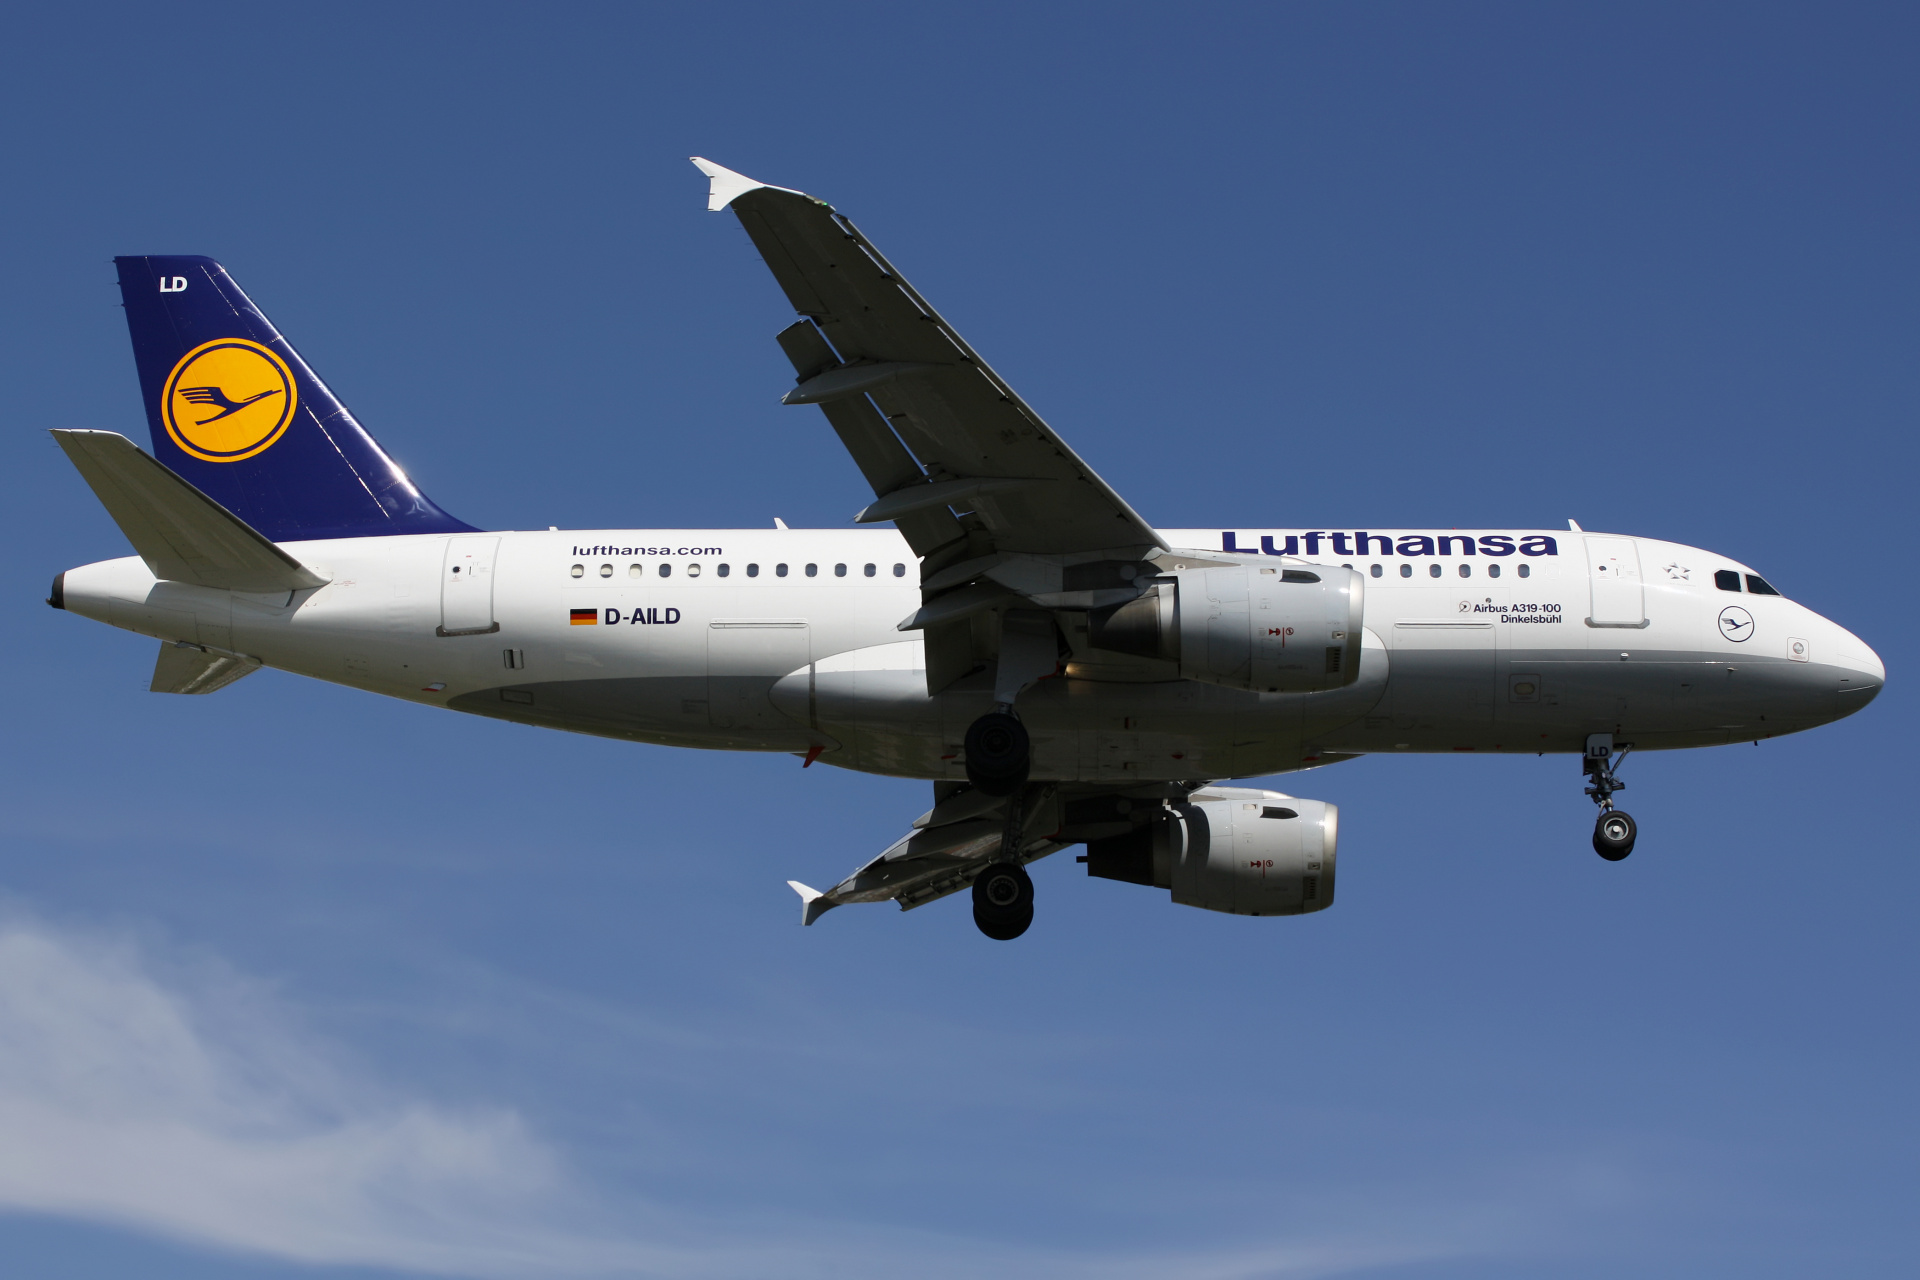 D-AILD (Aircraft » EPWA Spotting » Airbus A319-100 » Lufthansa)